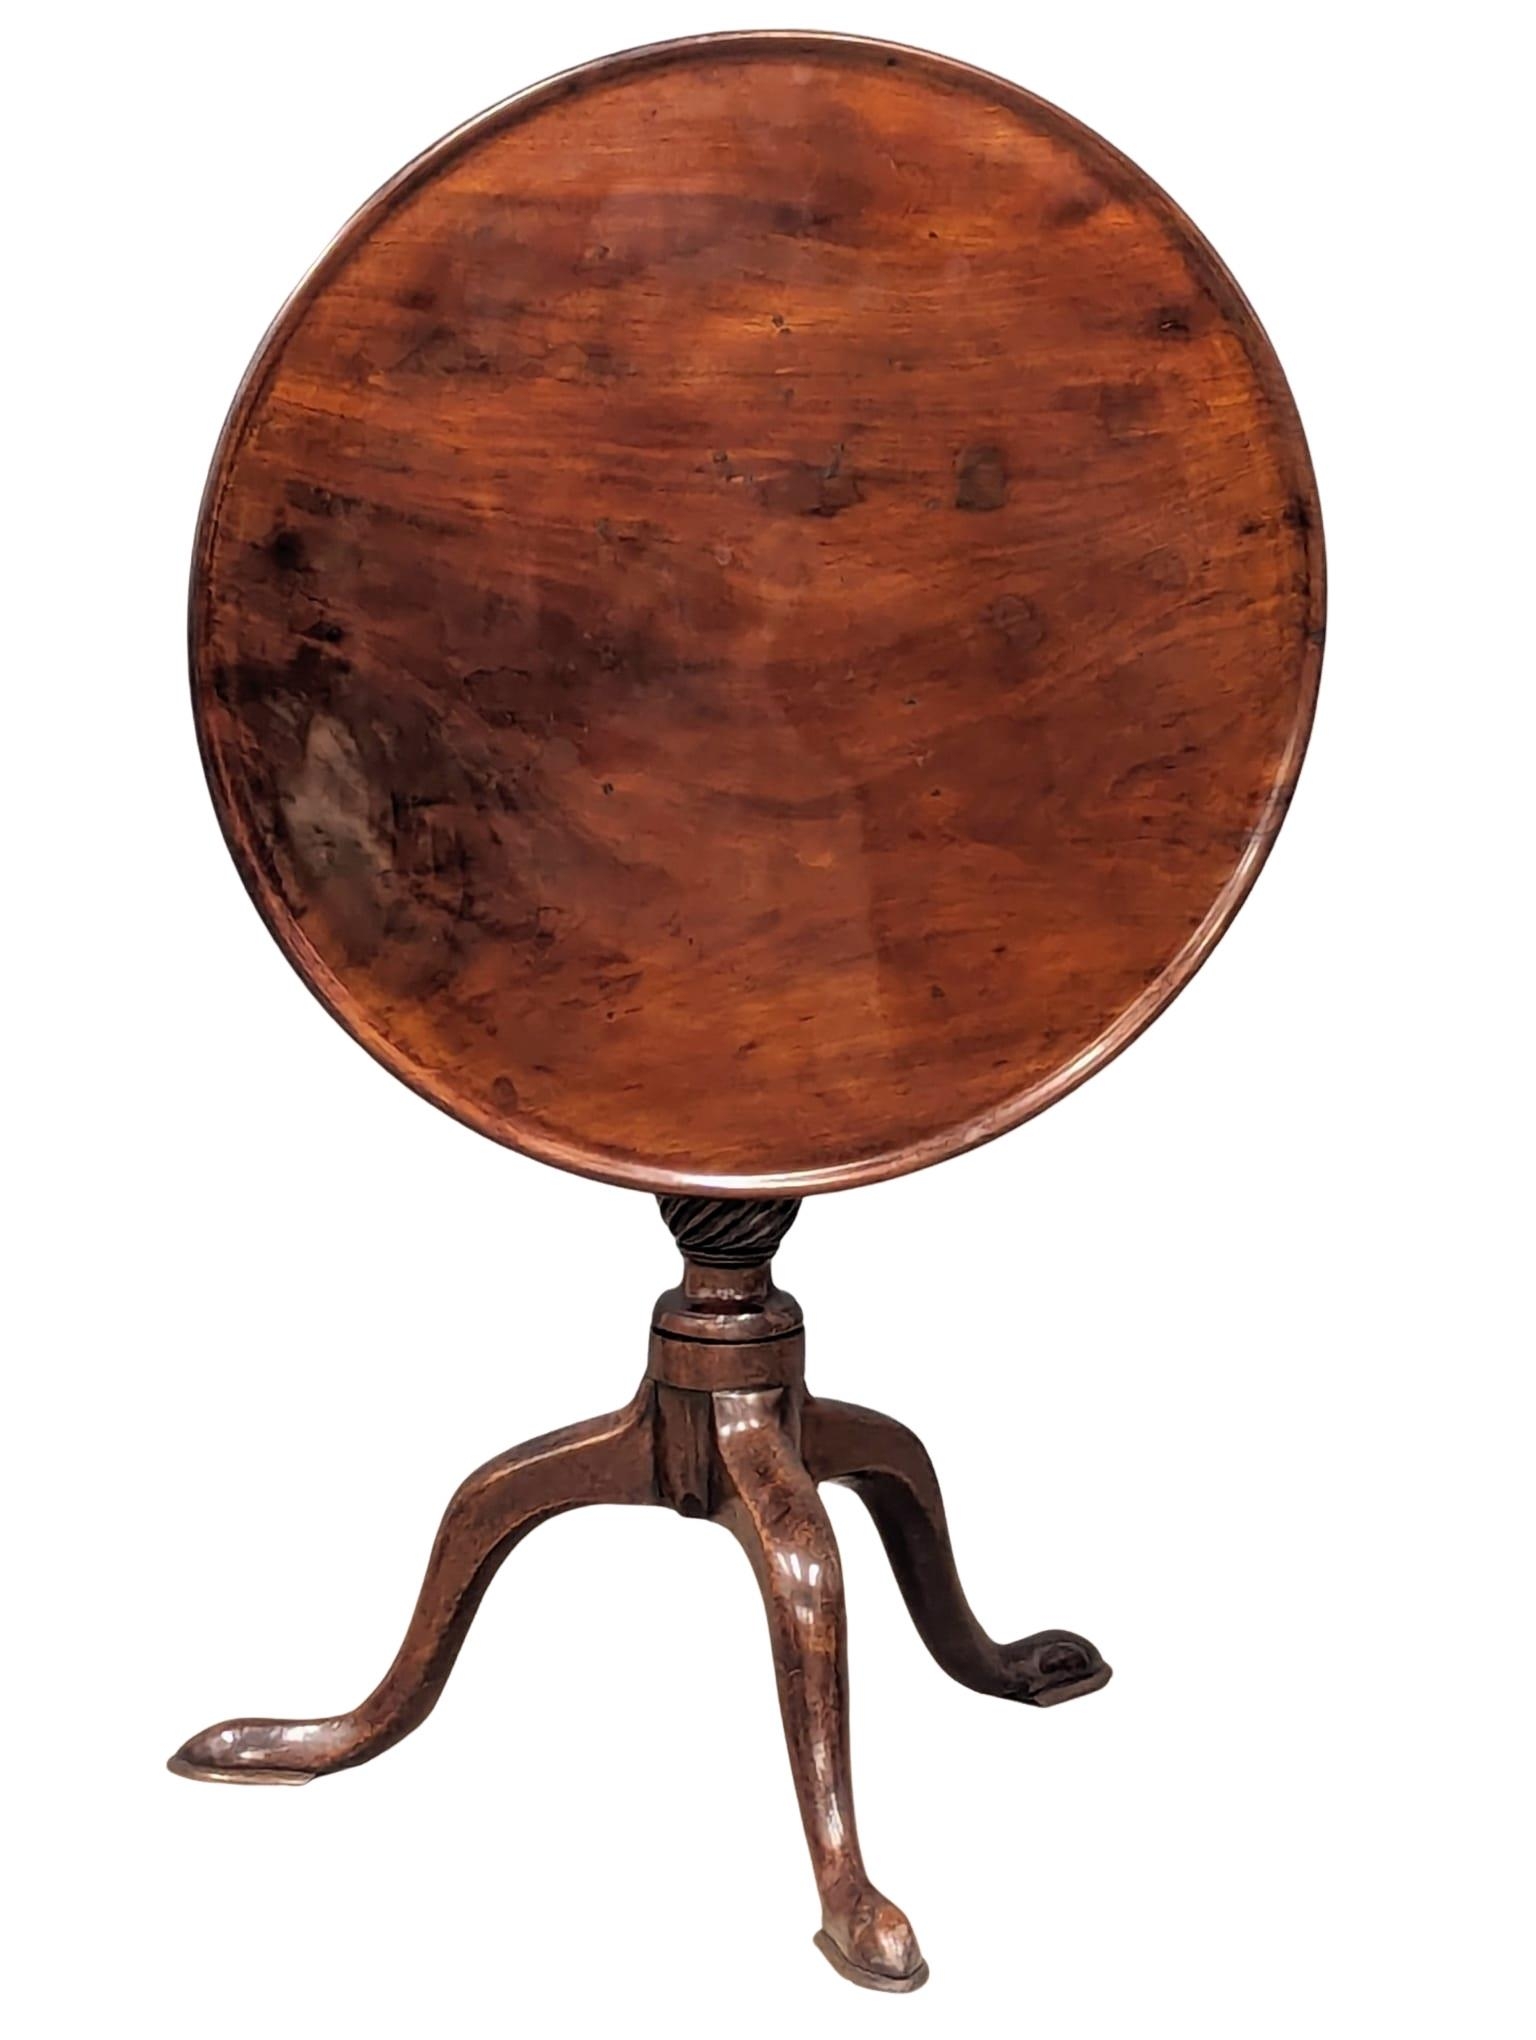 A George III mahogany snap top pedestal table. Circa 1790-1800. 68x70cm - Image 3 of 4